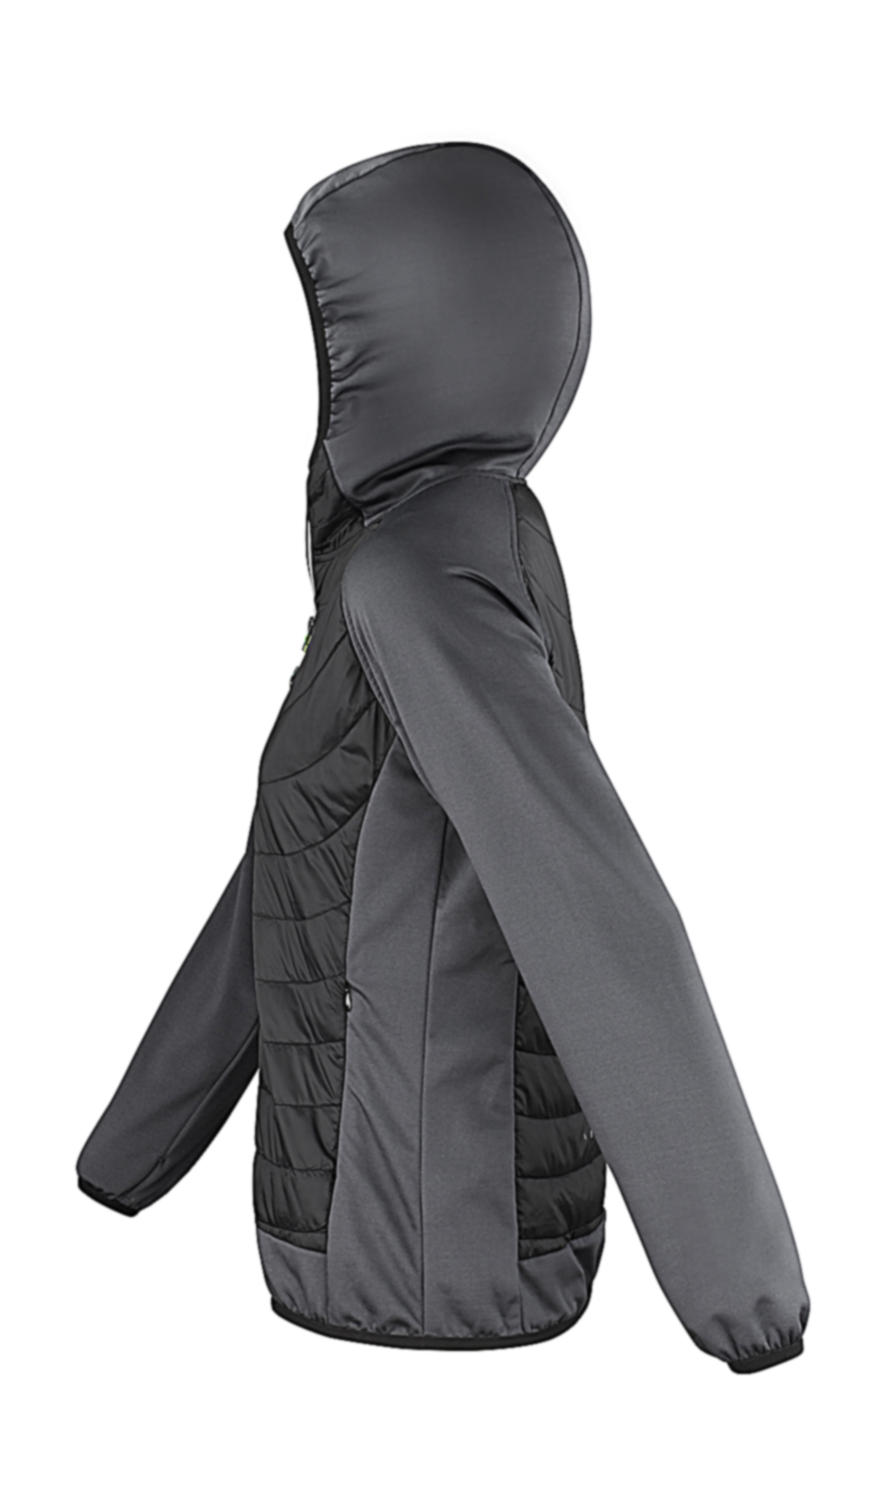  Womens Zero Gravity Jacket  in Farbe Black/Charcoal